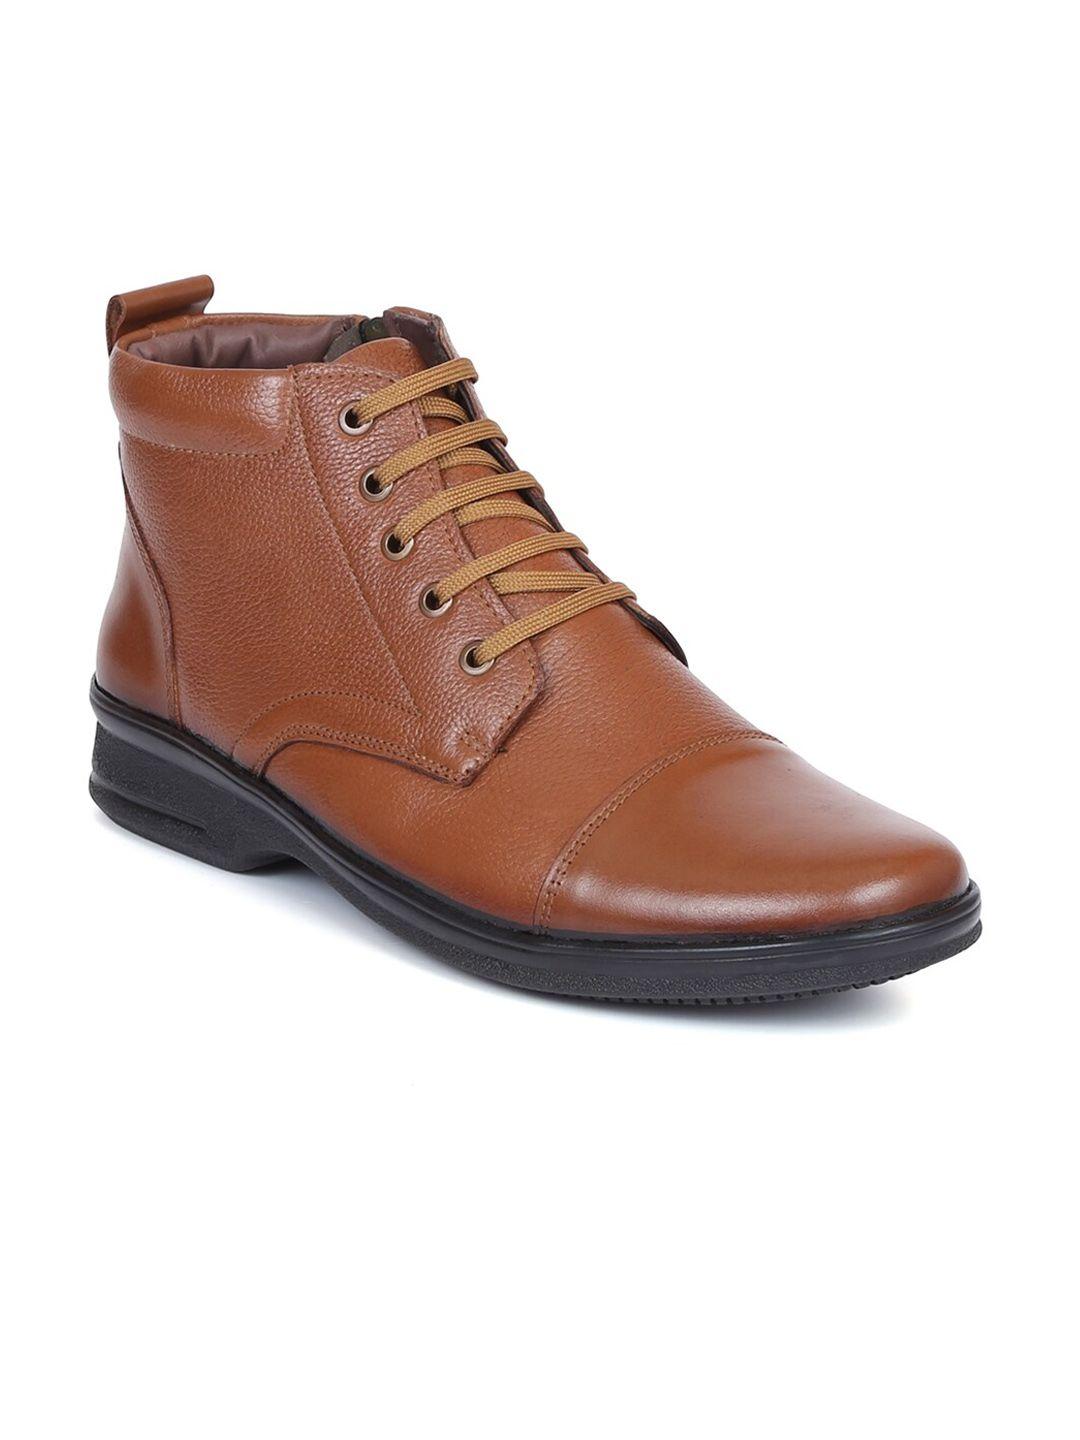 zoom shoes men leather mid-top derbys boots